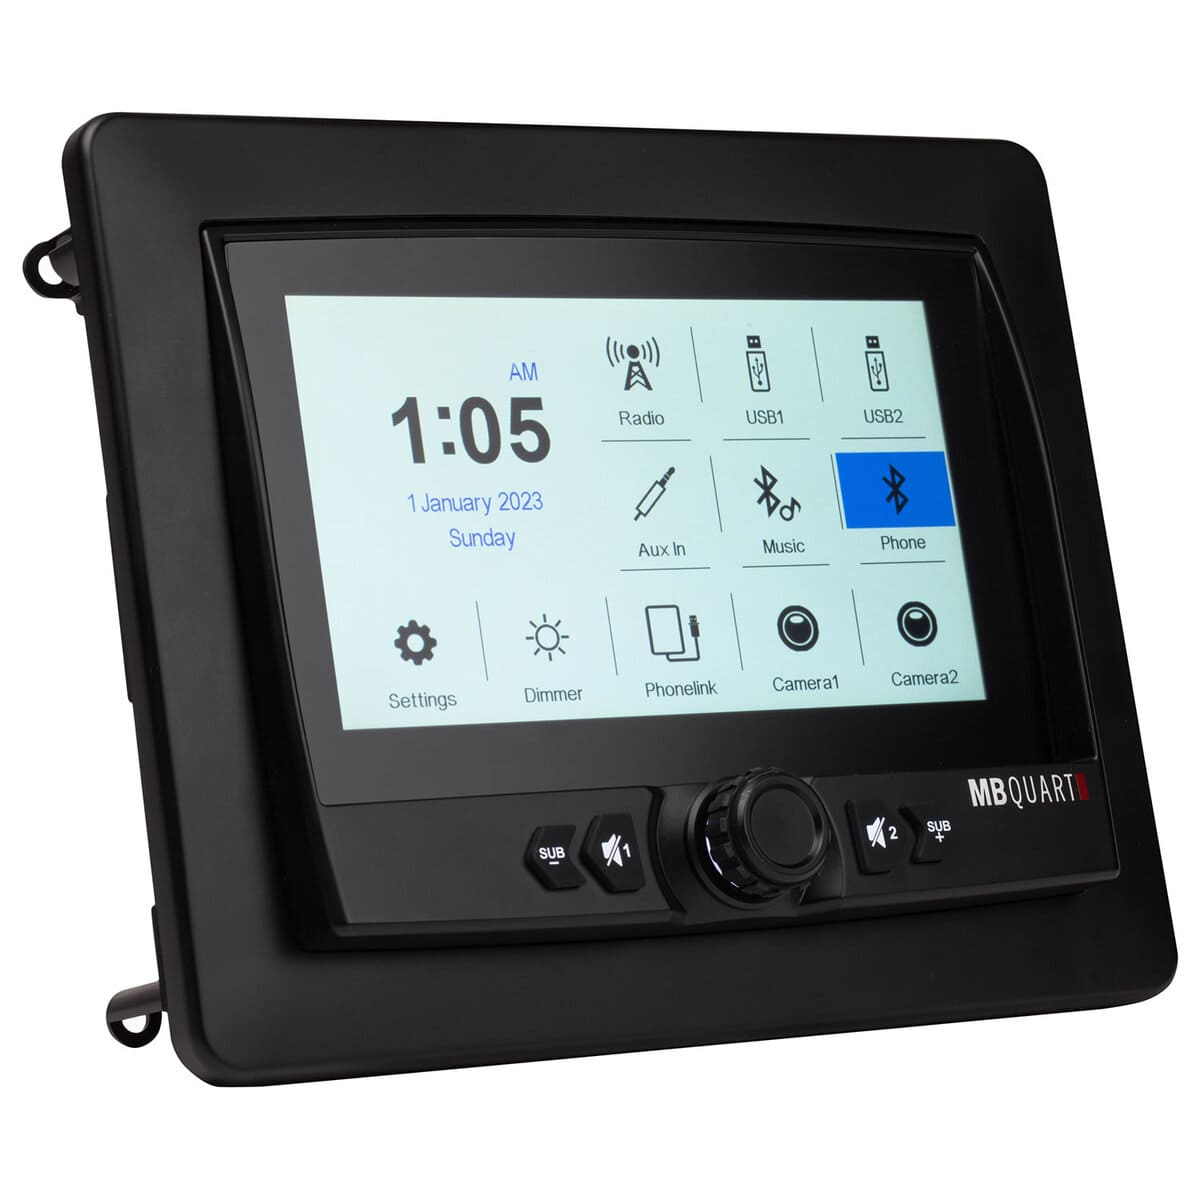 MB Quart GMR7V1 7-Inch Waterproof Touchscreen Car Play Source Unit